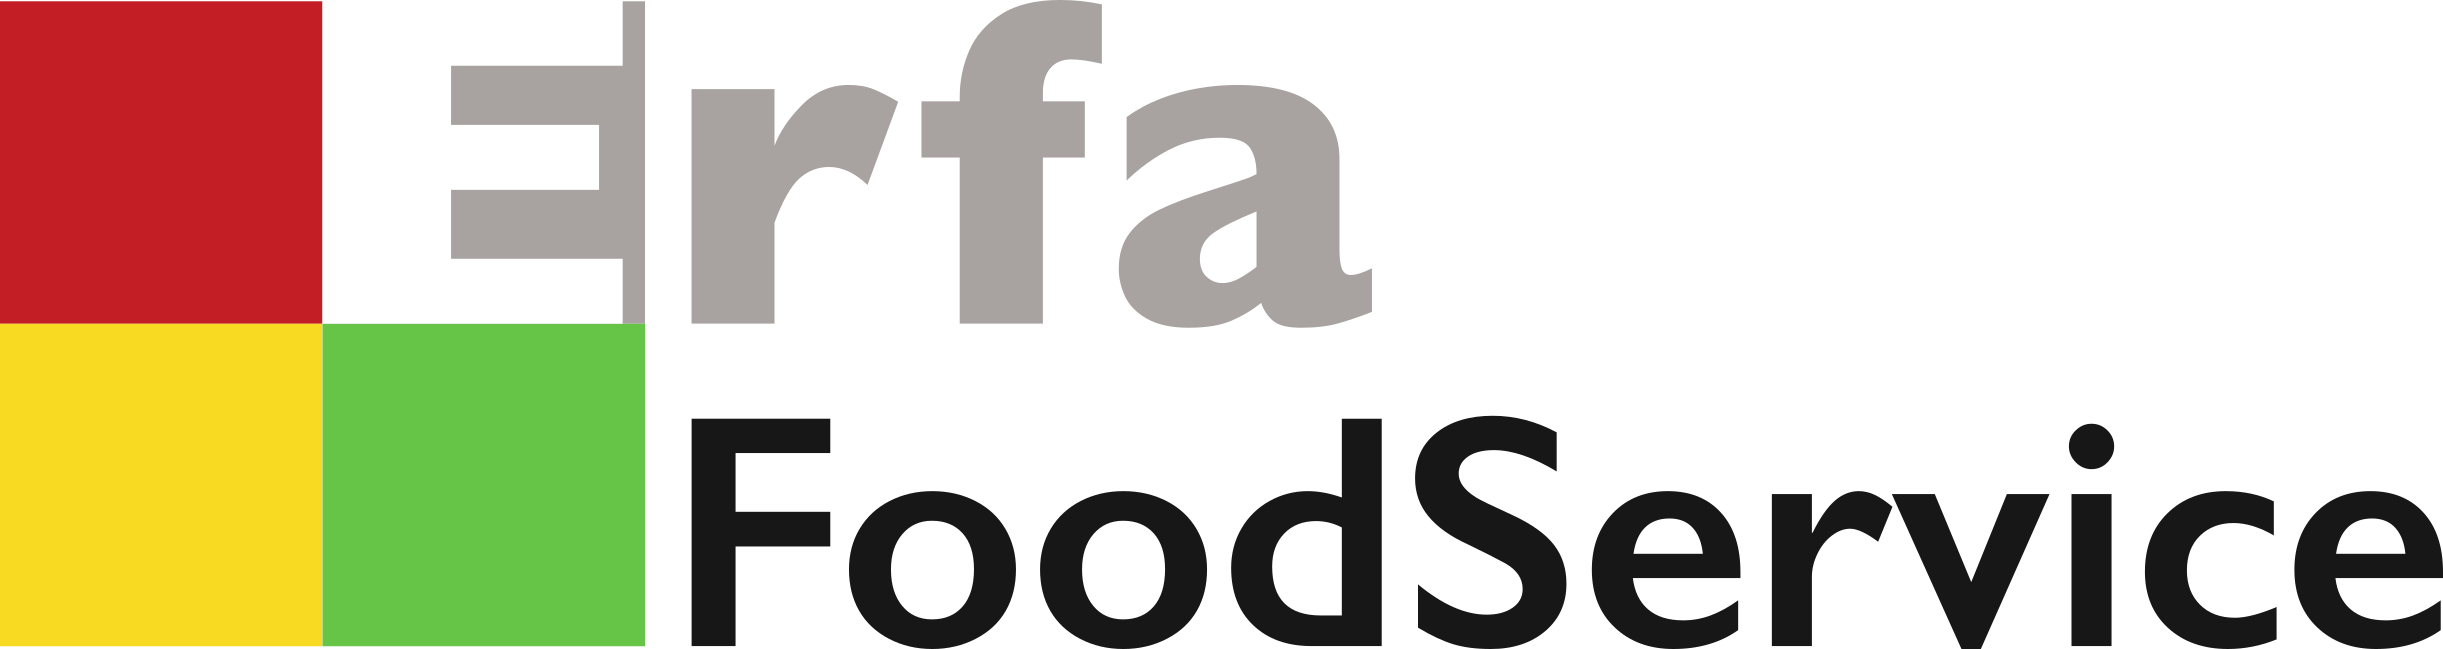 Erfa Food Service